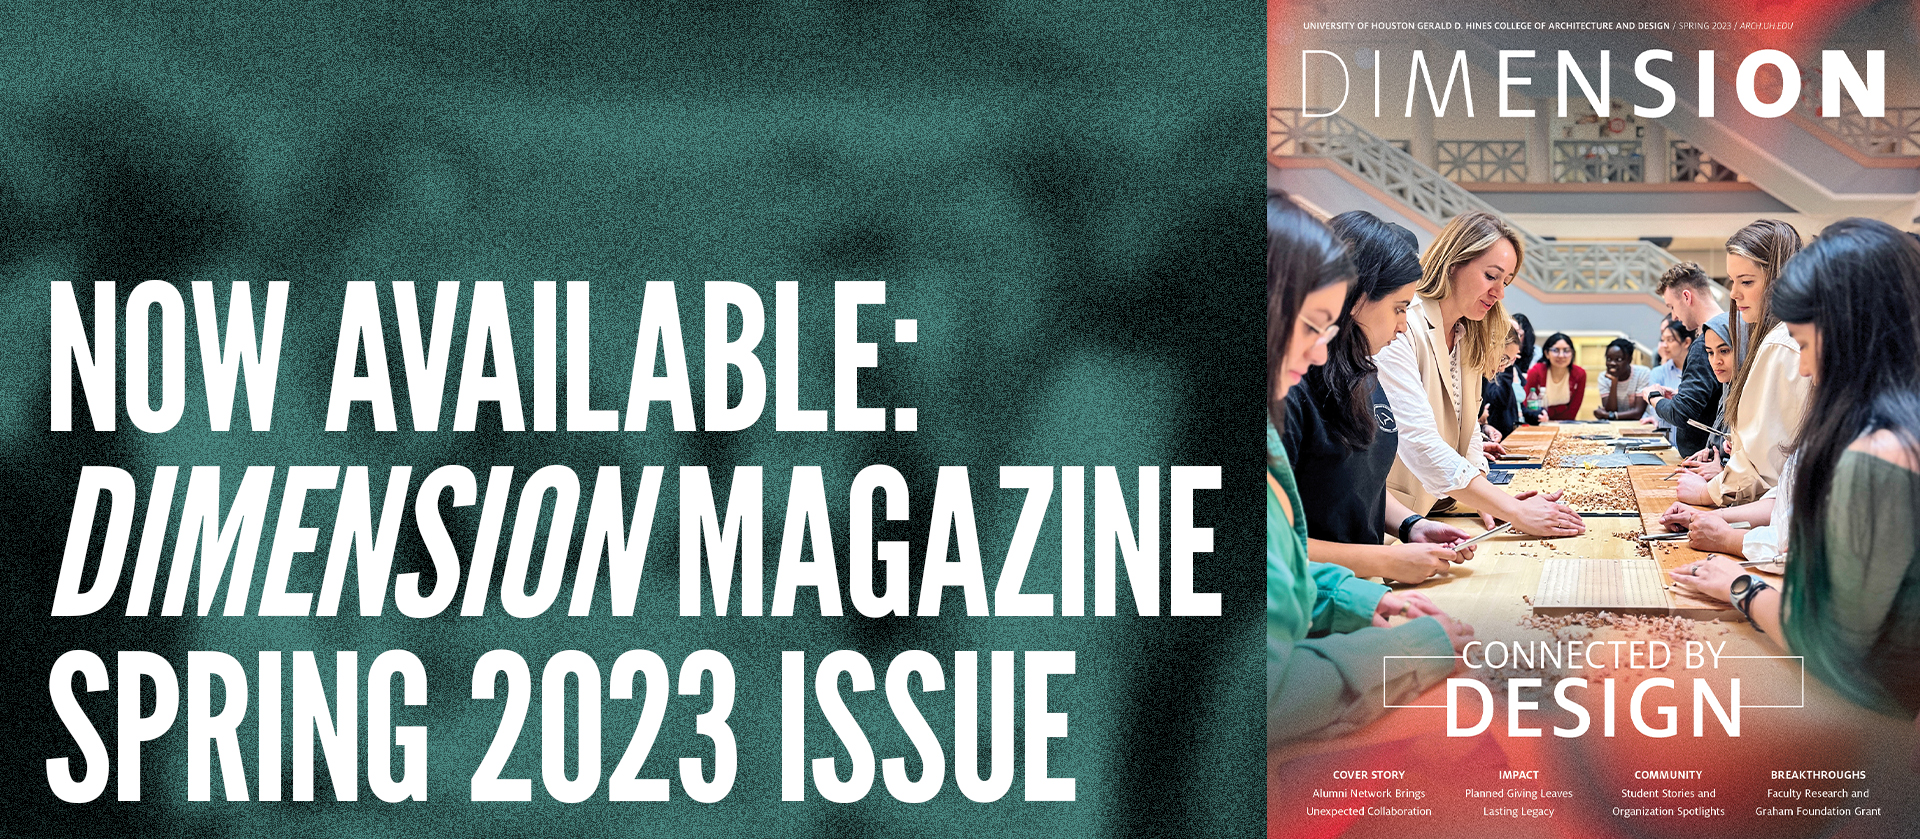 DIMENSION Magazine Spring 2023 Issue